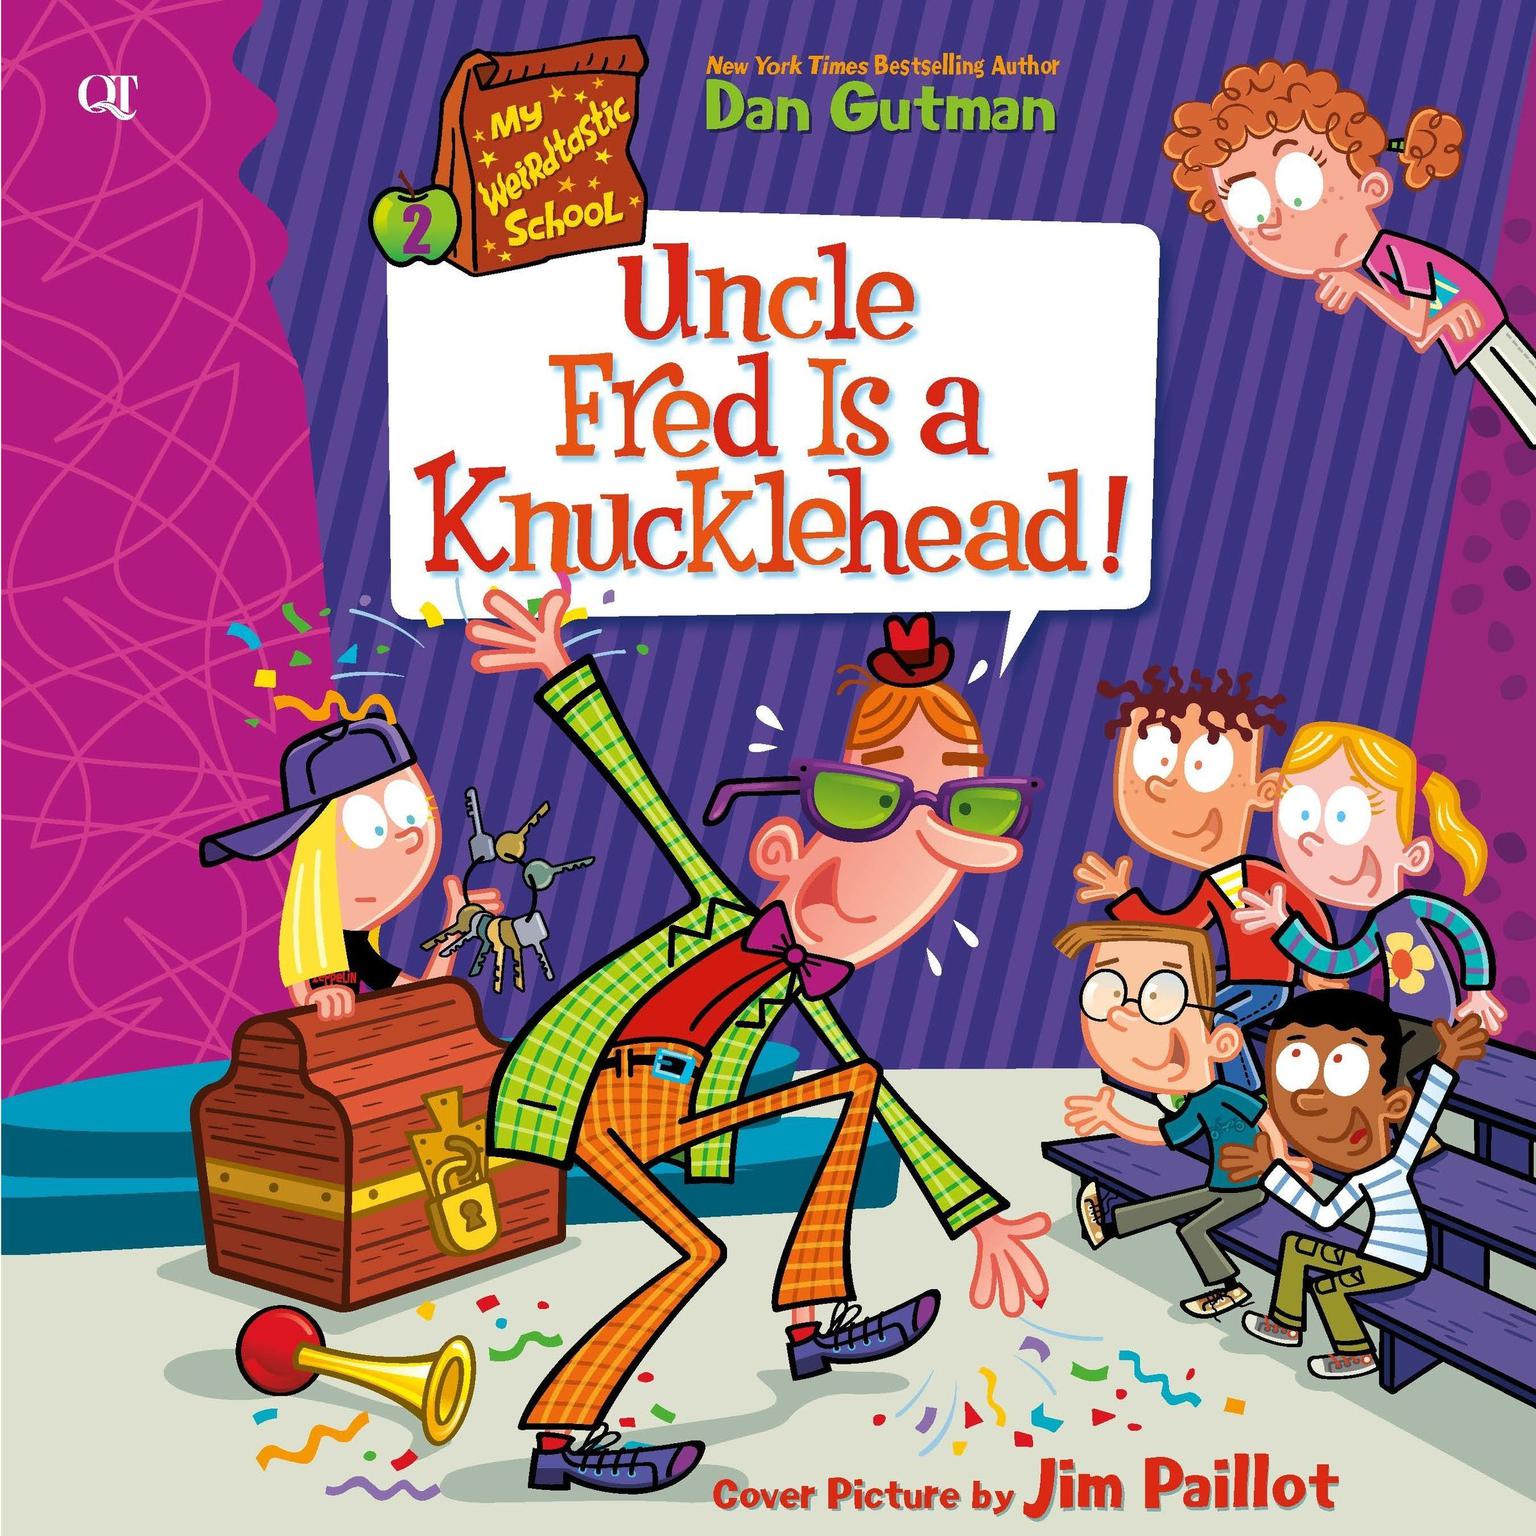 My Weirdtastic School #2: Uncle Fred Is a Knucklehead! Audiobook, by Dan Gutman